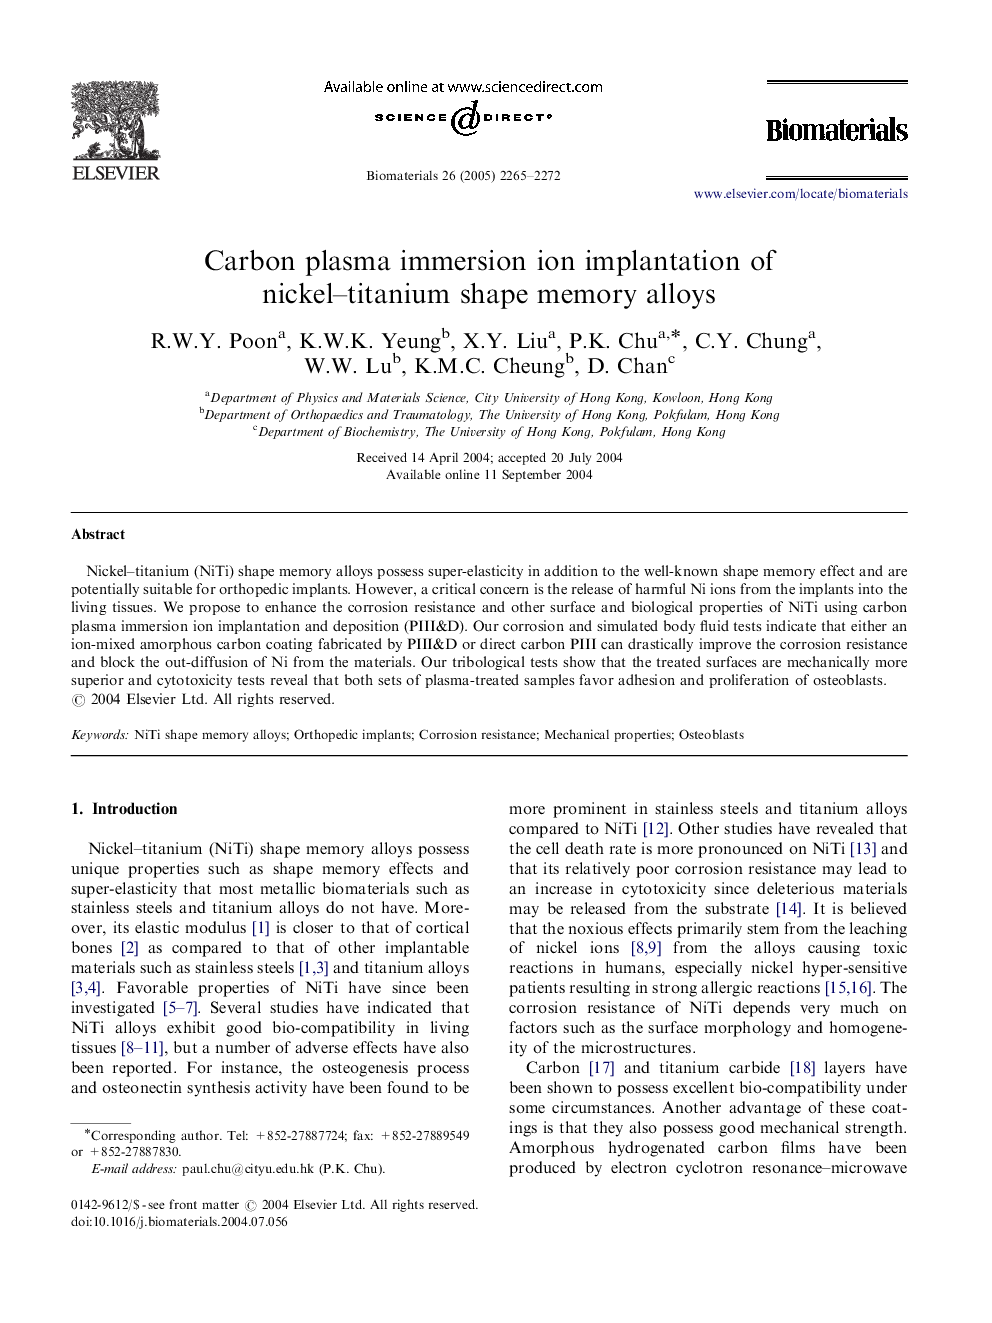 Carbon plasma immersion ion implantation of nickel–titanium shape memory alloys